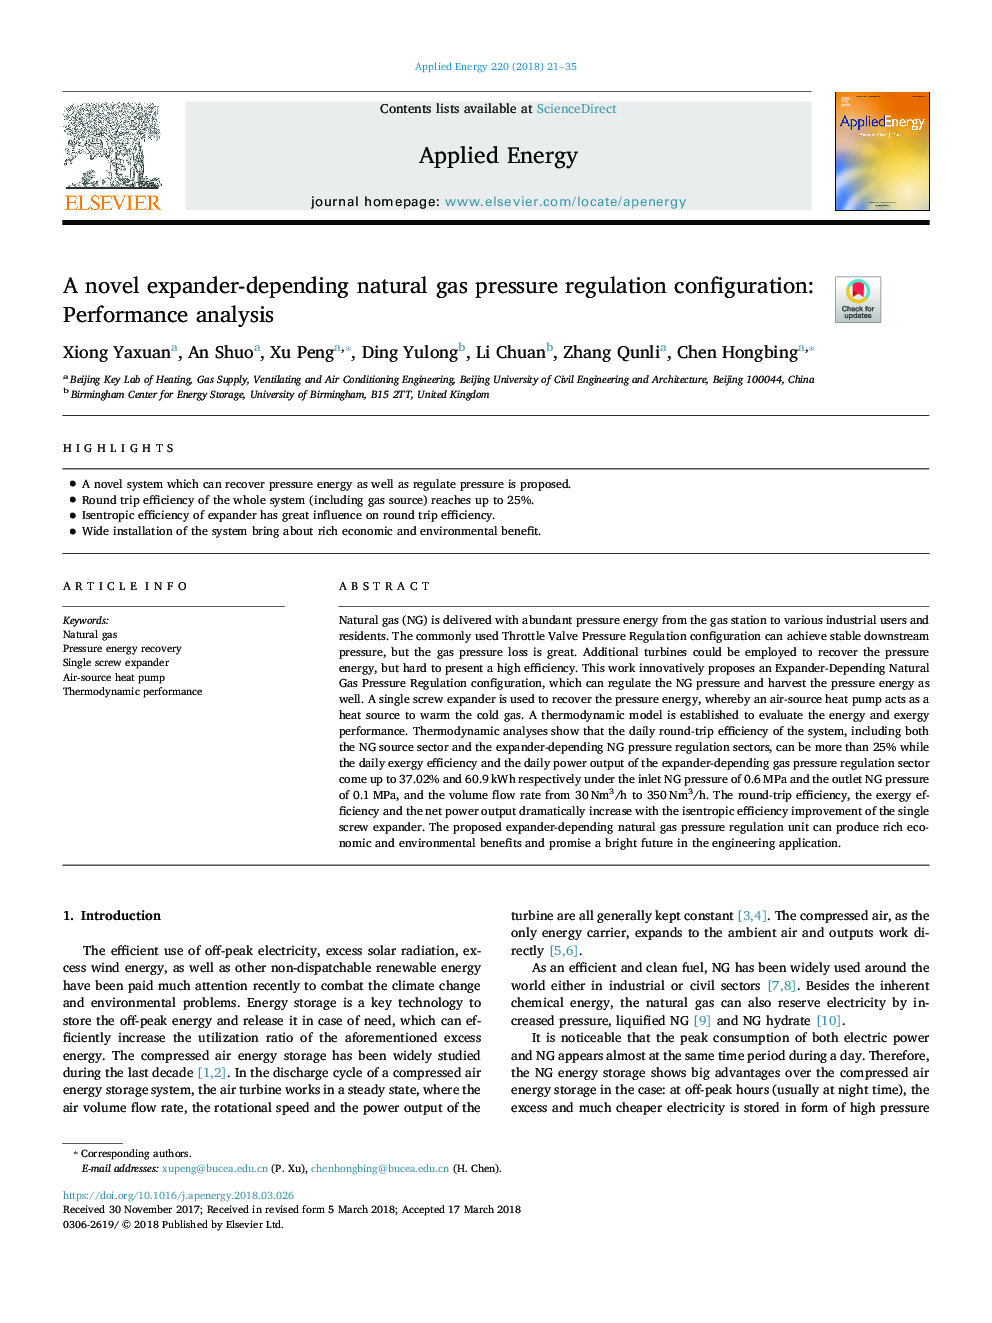 A novel expander-depending natural gas pressure regulation configuration: Performance analysis